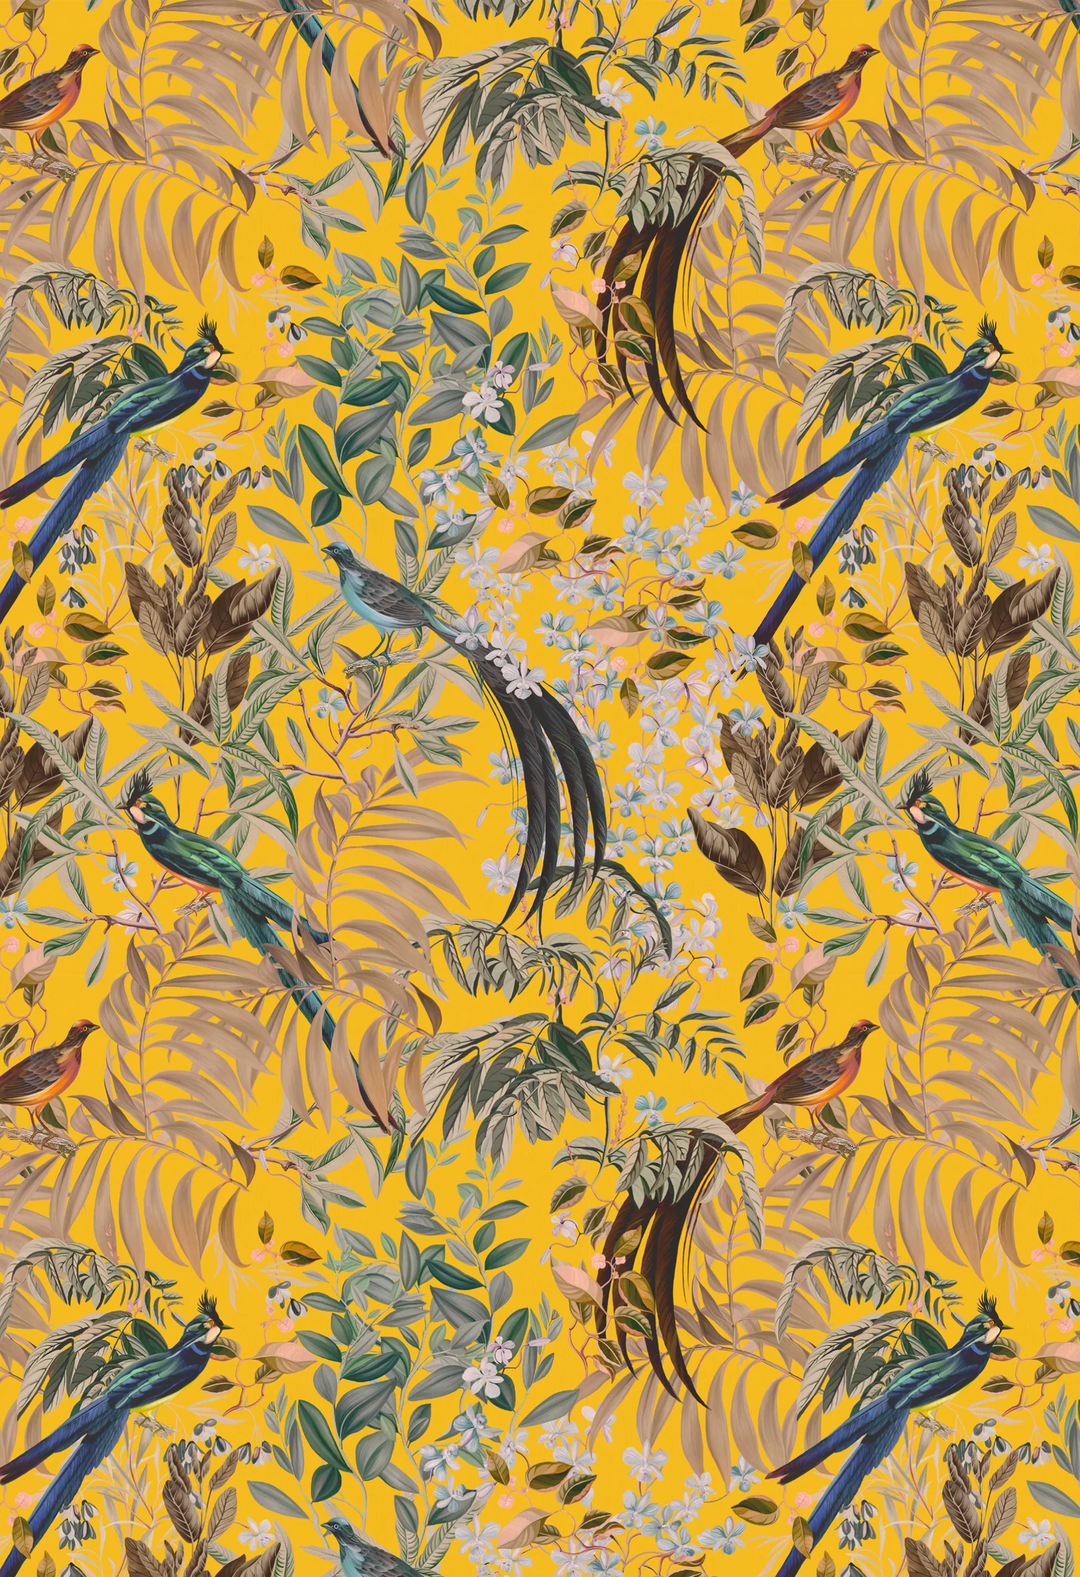 Deus-ex-gardenia-Resplendant-woods-wallpaper-India-Yellow-bright-botanical-birds-print-tropical-birds-leaves-antique-style-woodland-theme-classical-hand-illustrated-printed-wallpaper